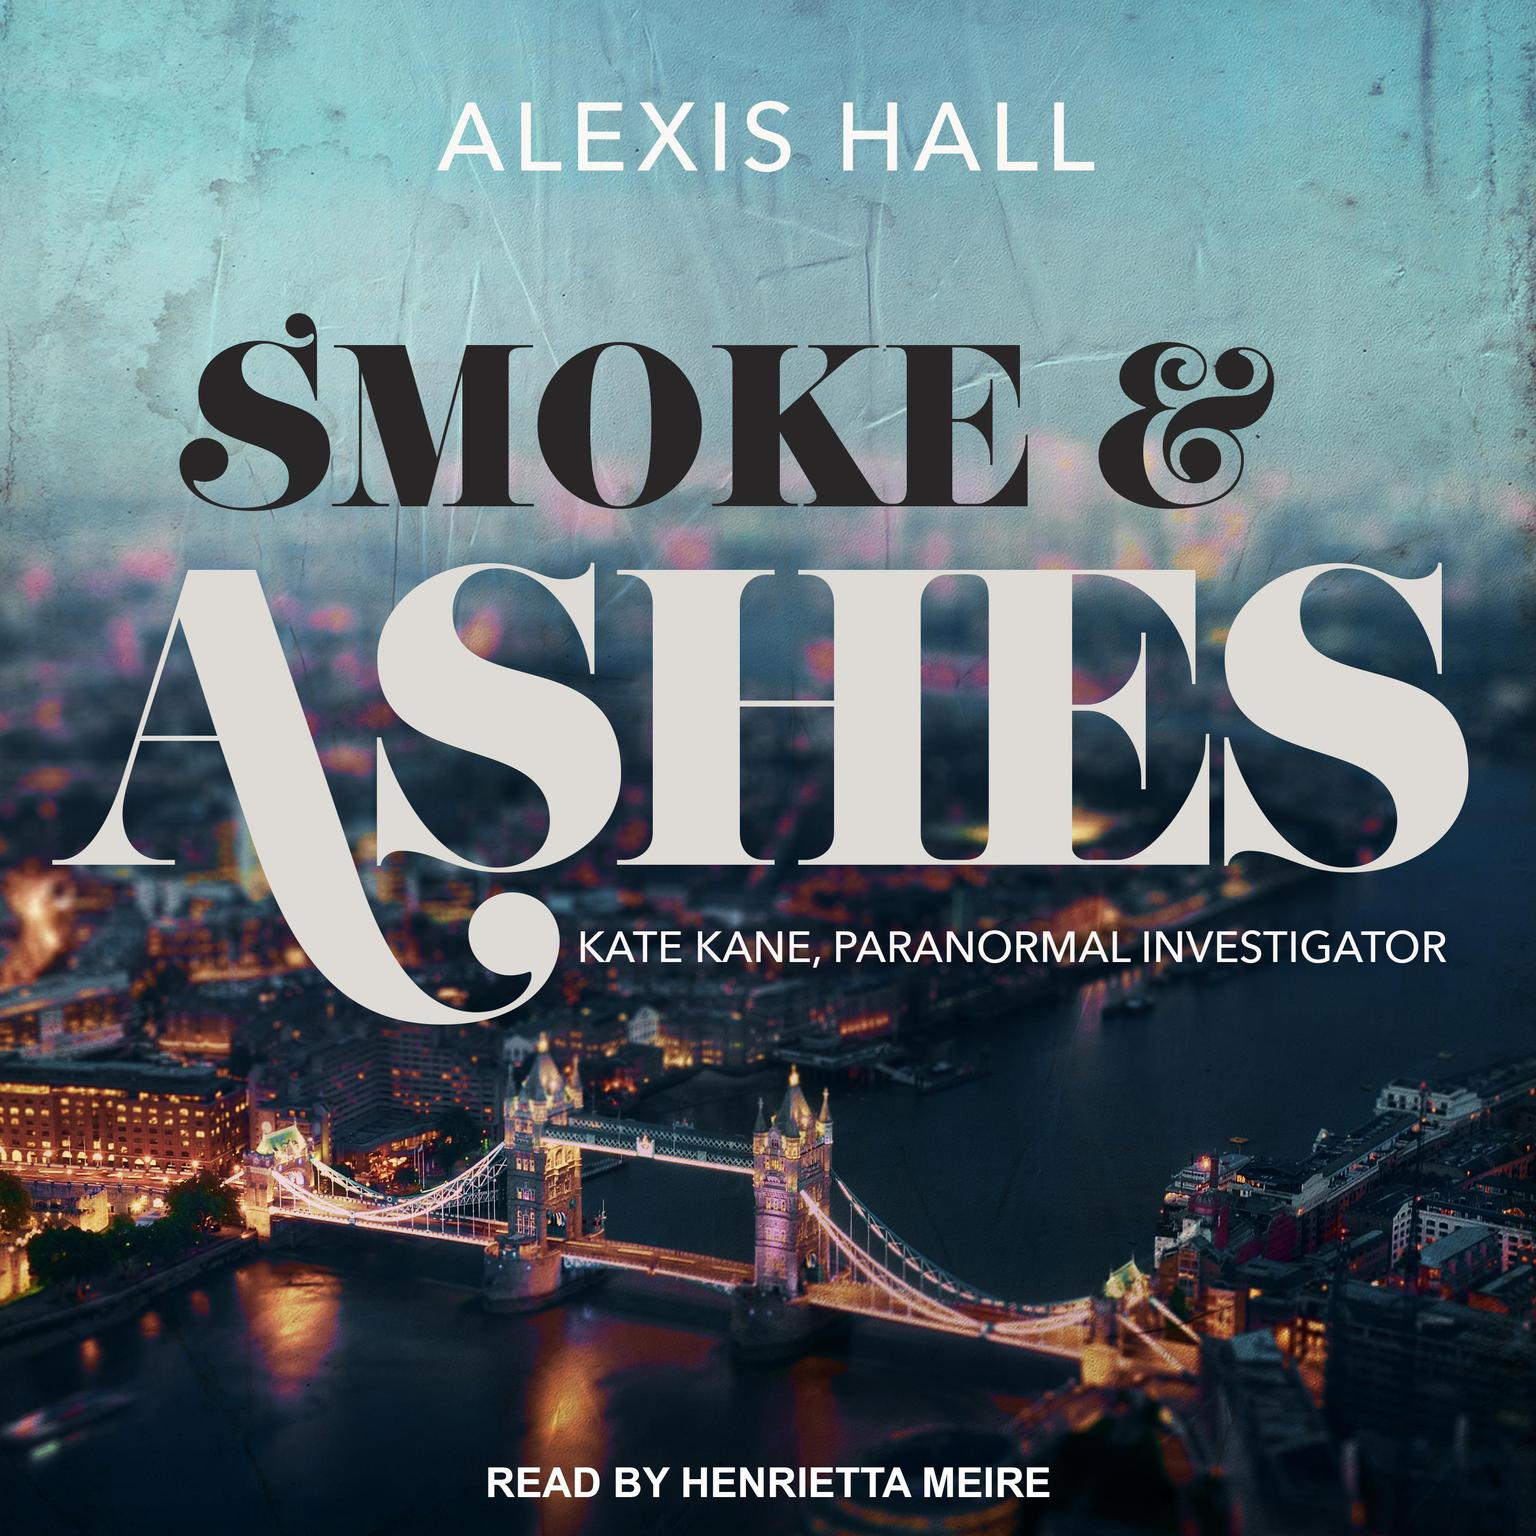 Alexis Hall, Henrietta Meire: Smoke & Ashes (AudiobookFormat, 2021, Tantor Audio)